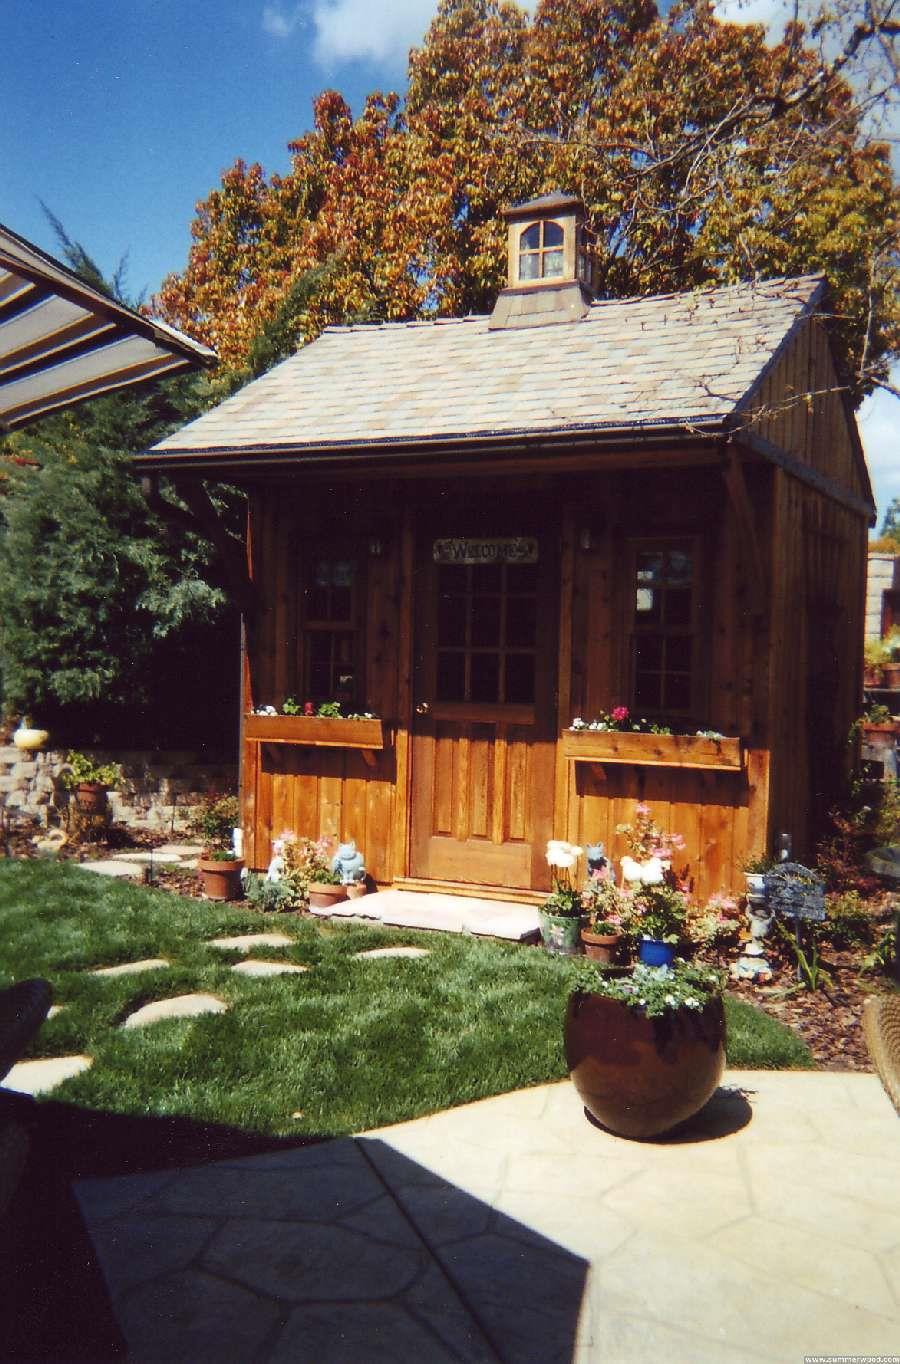 Glen Echo 8x10 home studio with sash window in Thousand Oak California. ID number 206127-4